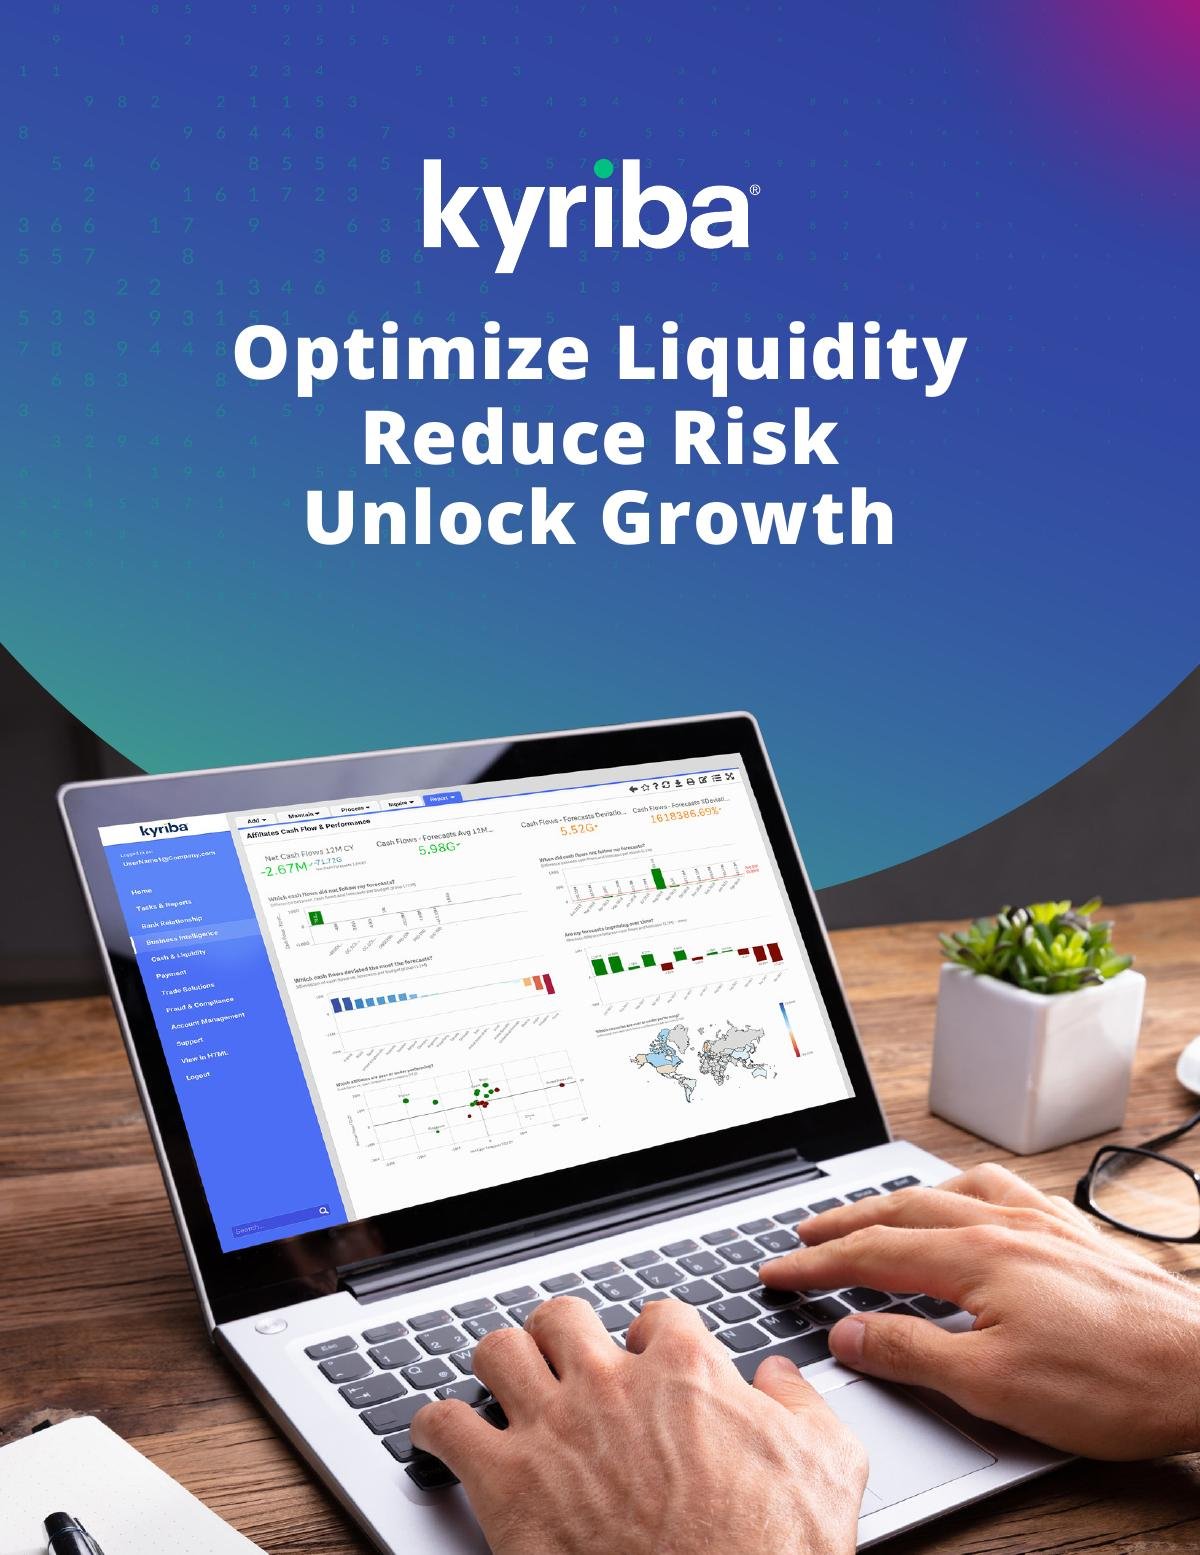 Kyriba's Enterprise Liquidity Management Platform: Optimize Liquidity, Reduce Risk, Unlock Growth